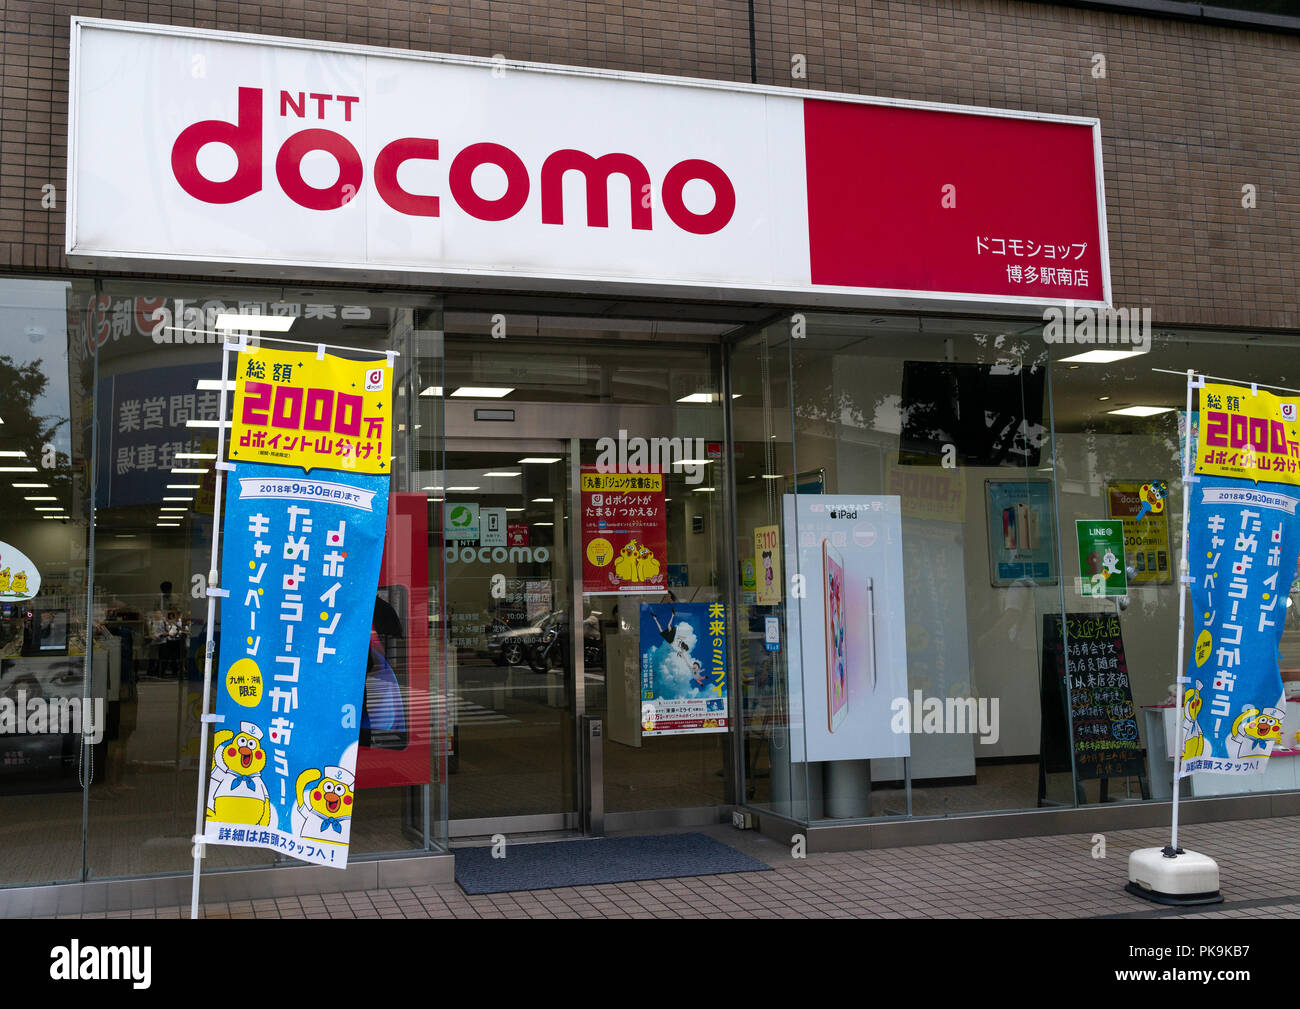 Ntt docomo shop, Kyushu region, Fukuoka, Japan Stock Photo